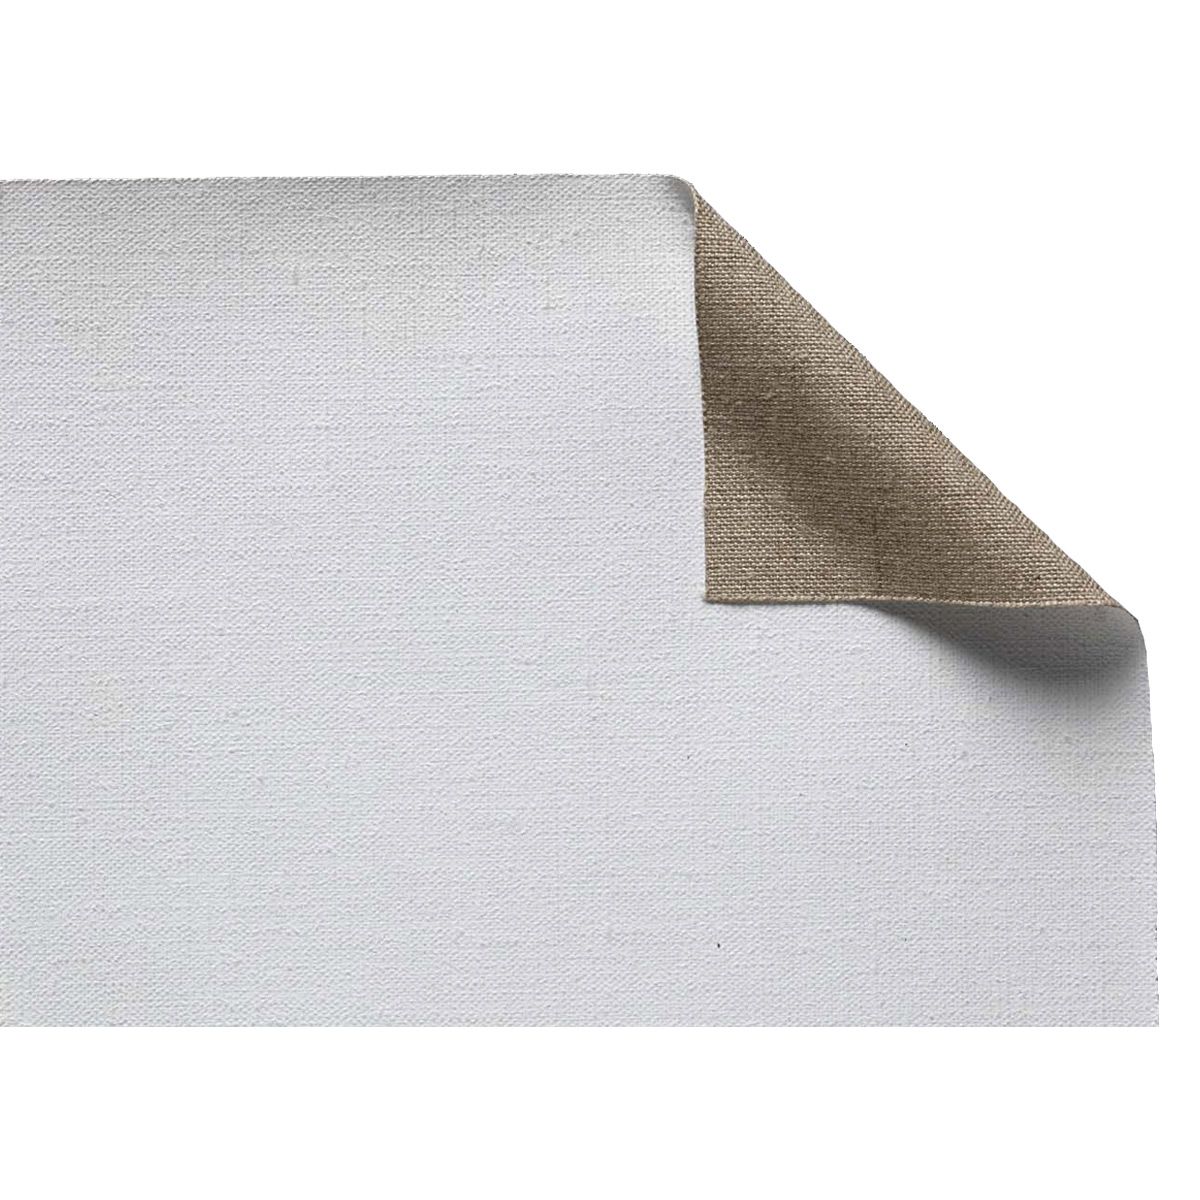 Claessens Linen #166 Double Universal Primed Medium Texture Roll, 122" x 10.9 yd